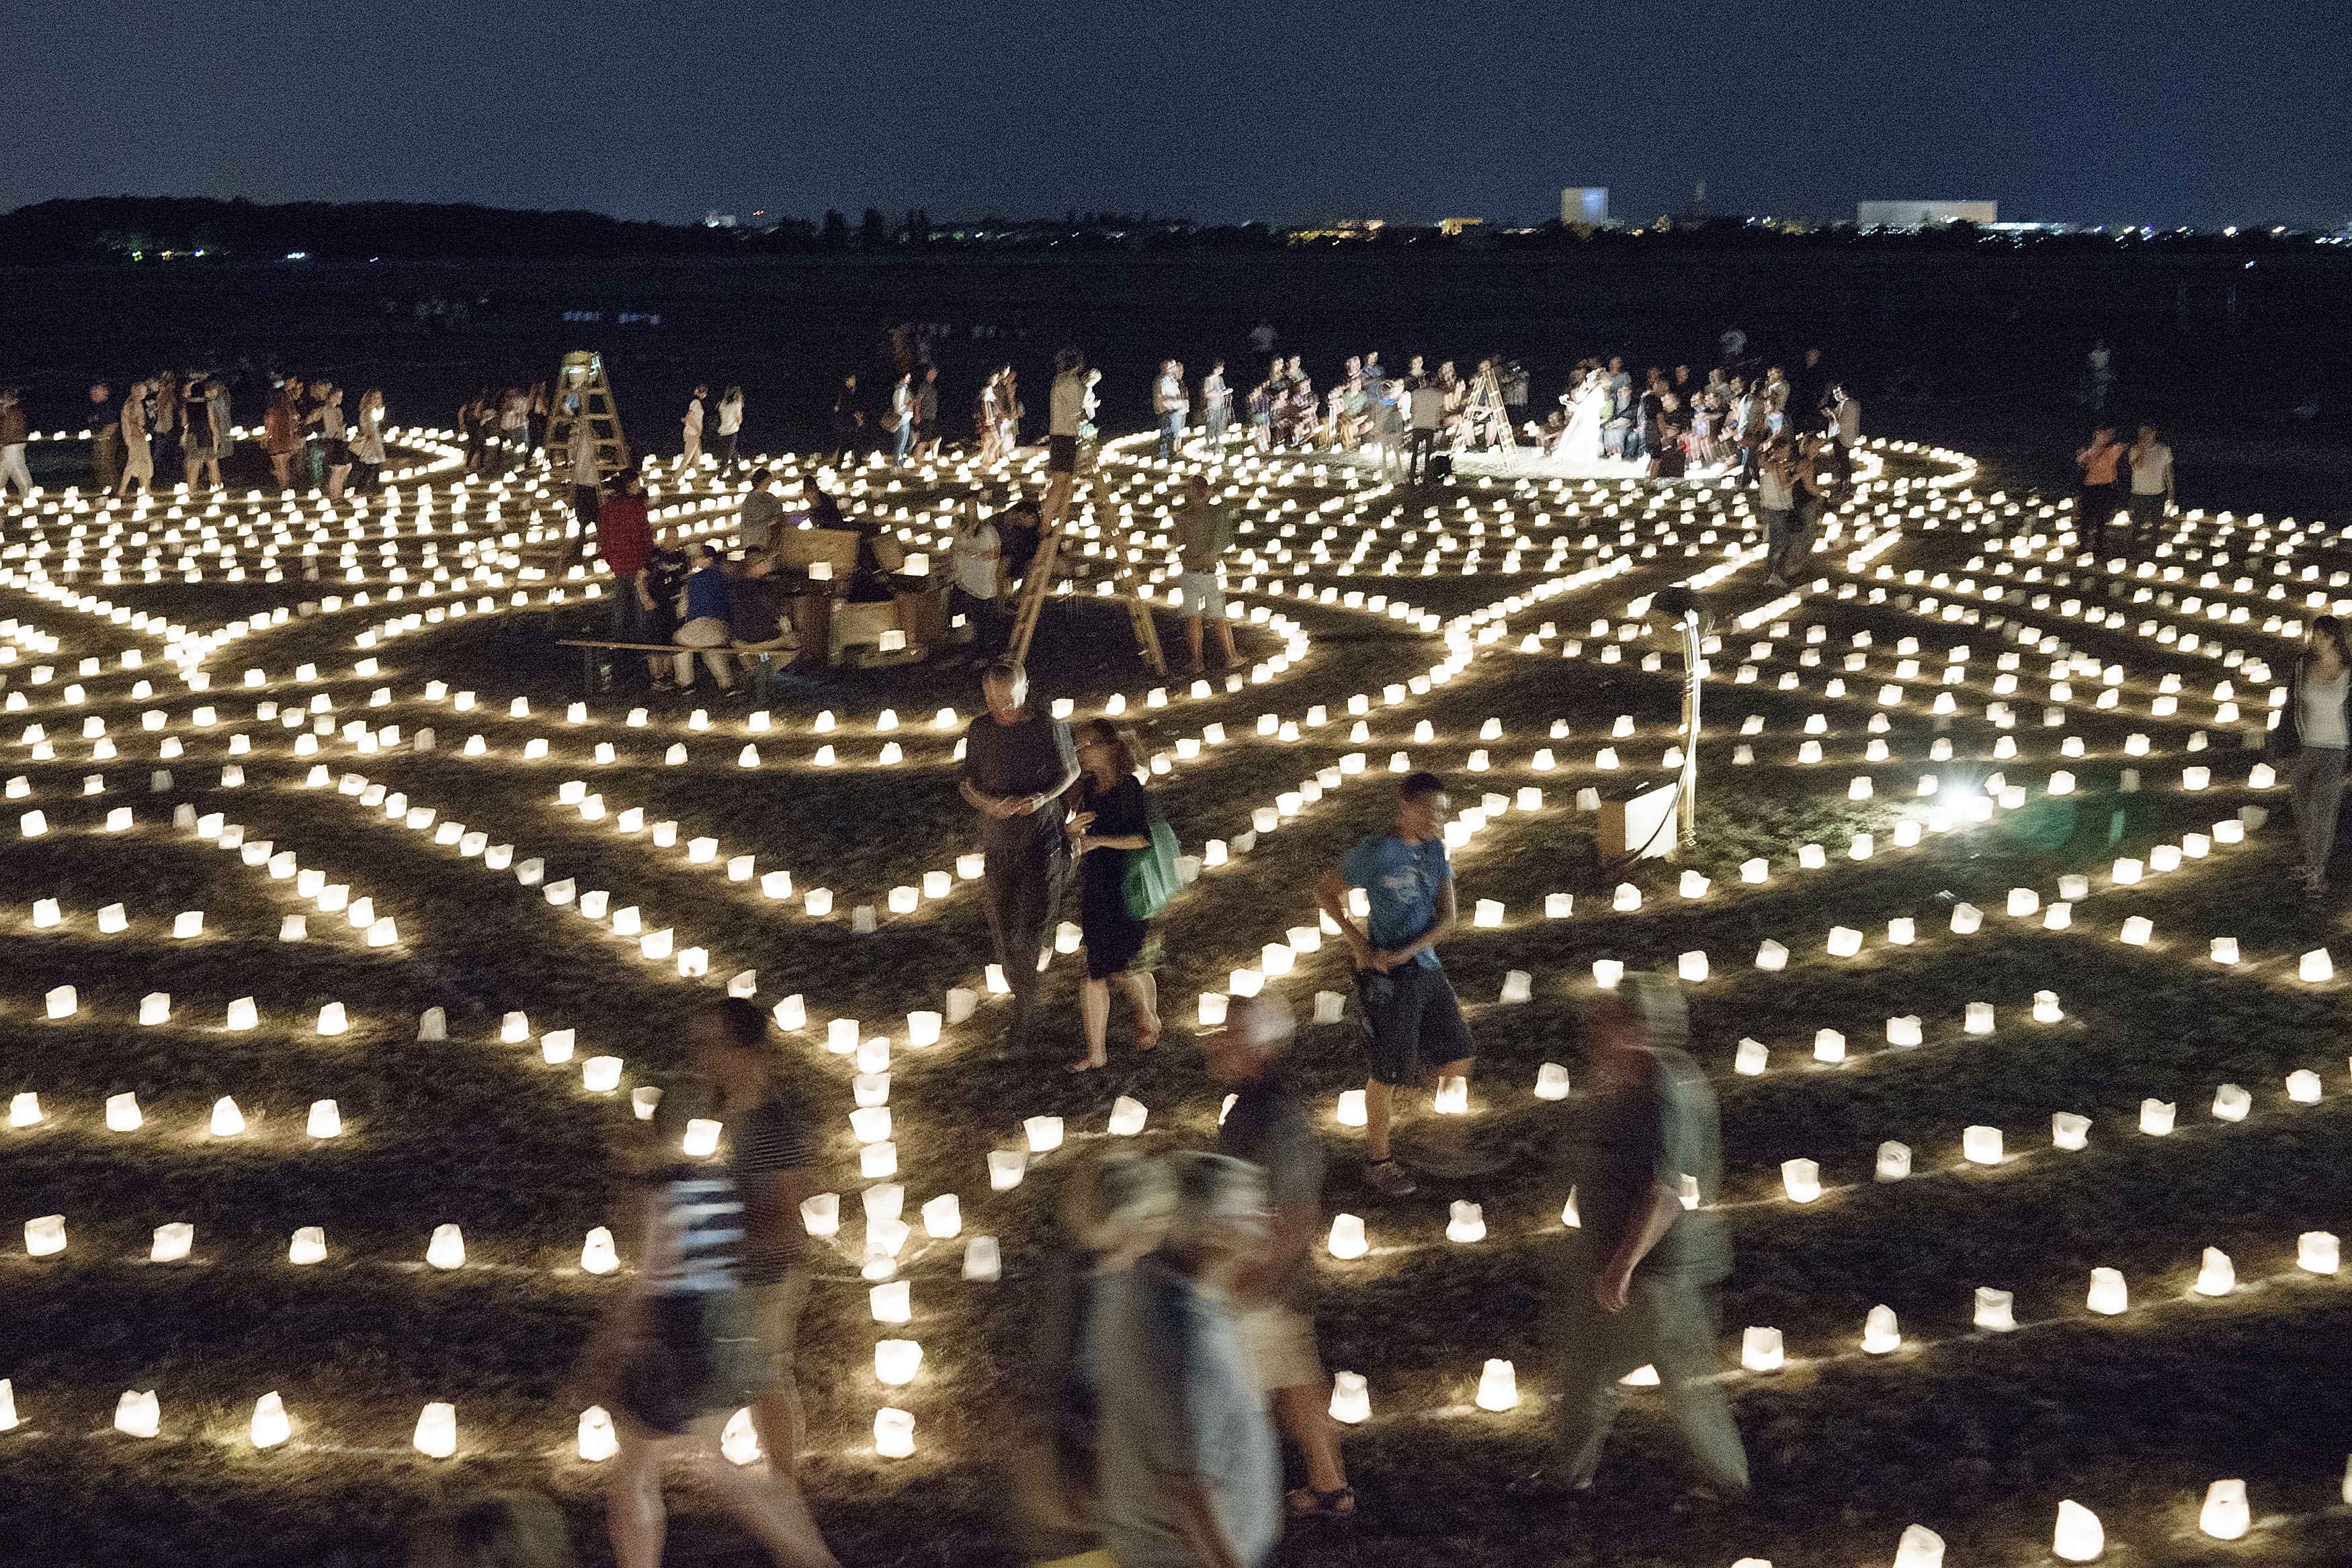 A Labyrinth Of Candles At Tempelhof Park